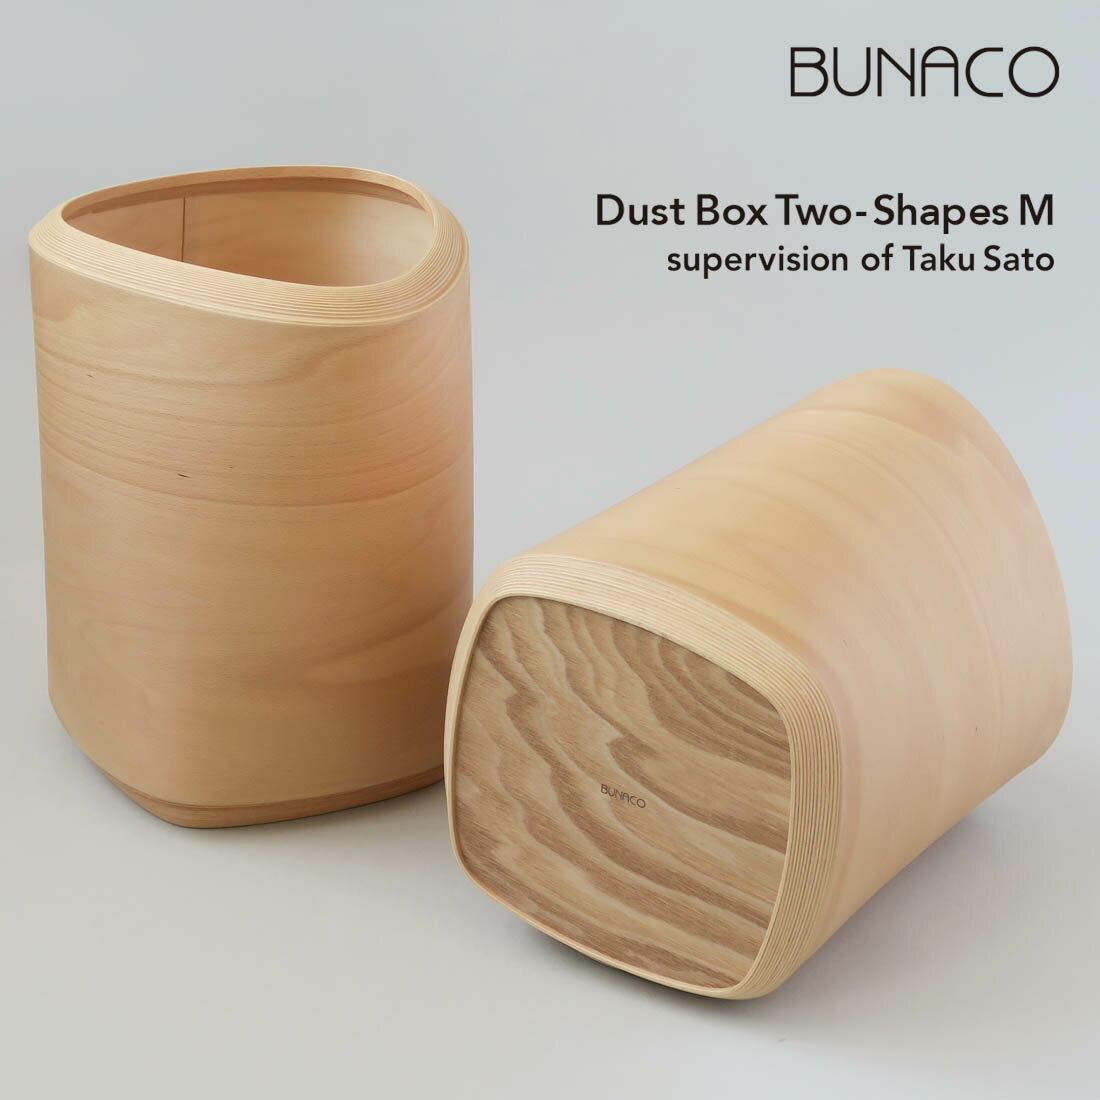 bunaco ブナコ Dust Box Two Shapes M 佐藤 卓 ダストボックス ゴミ箱 青森 ブナ 天然素材 国産 ギフト